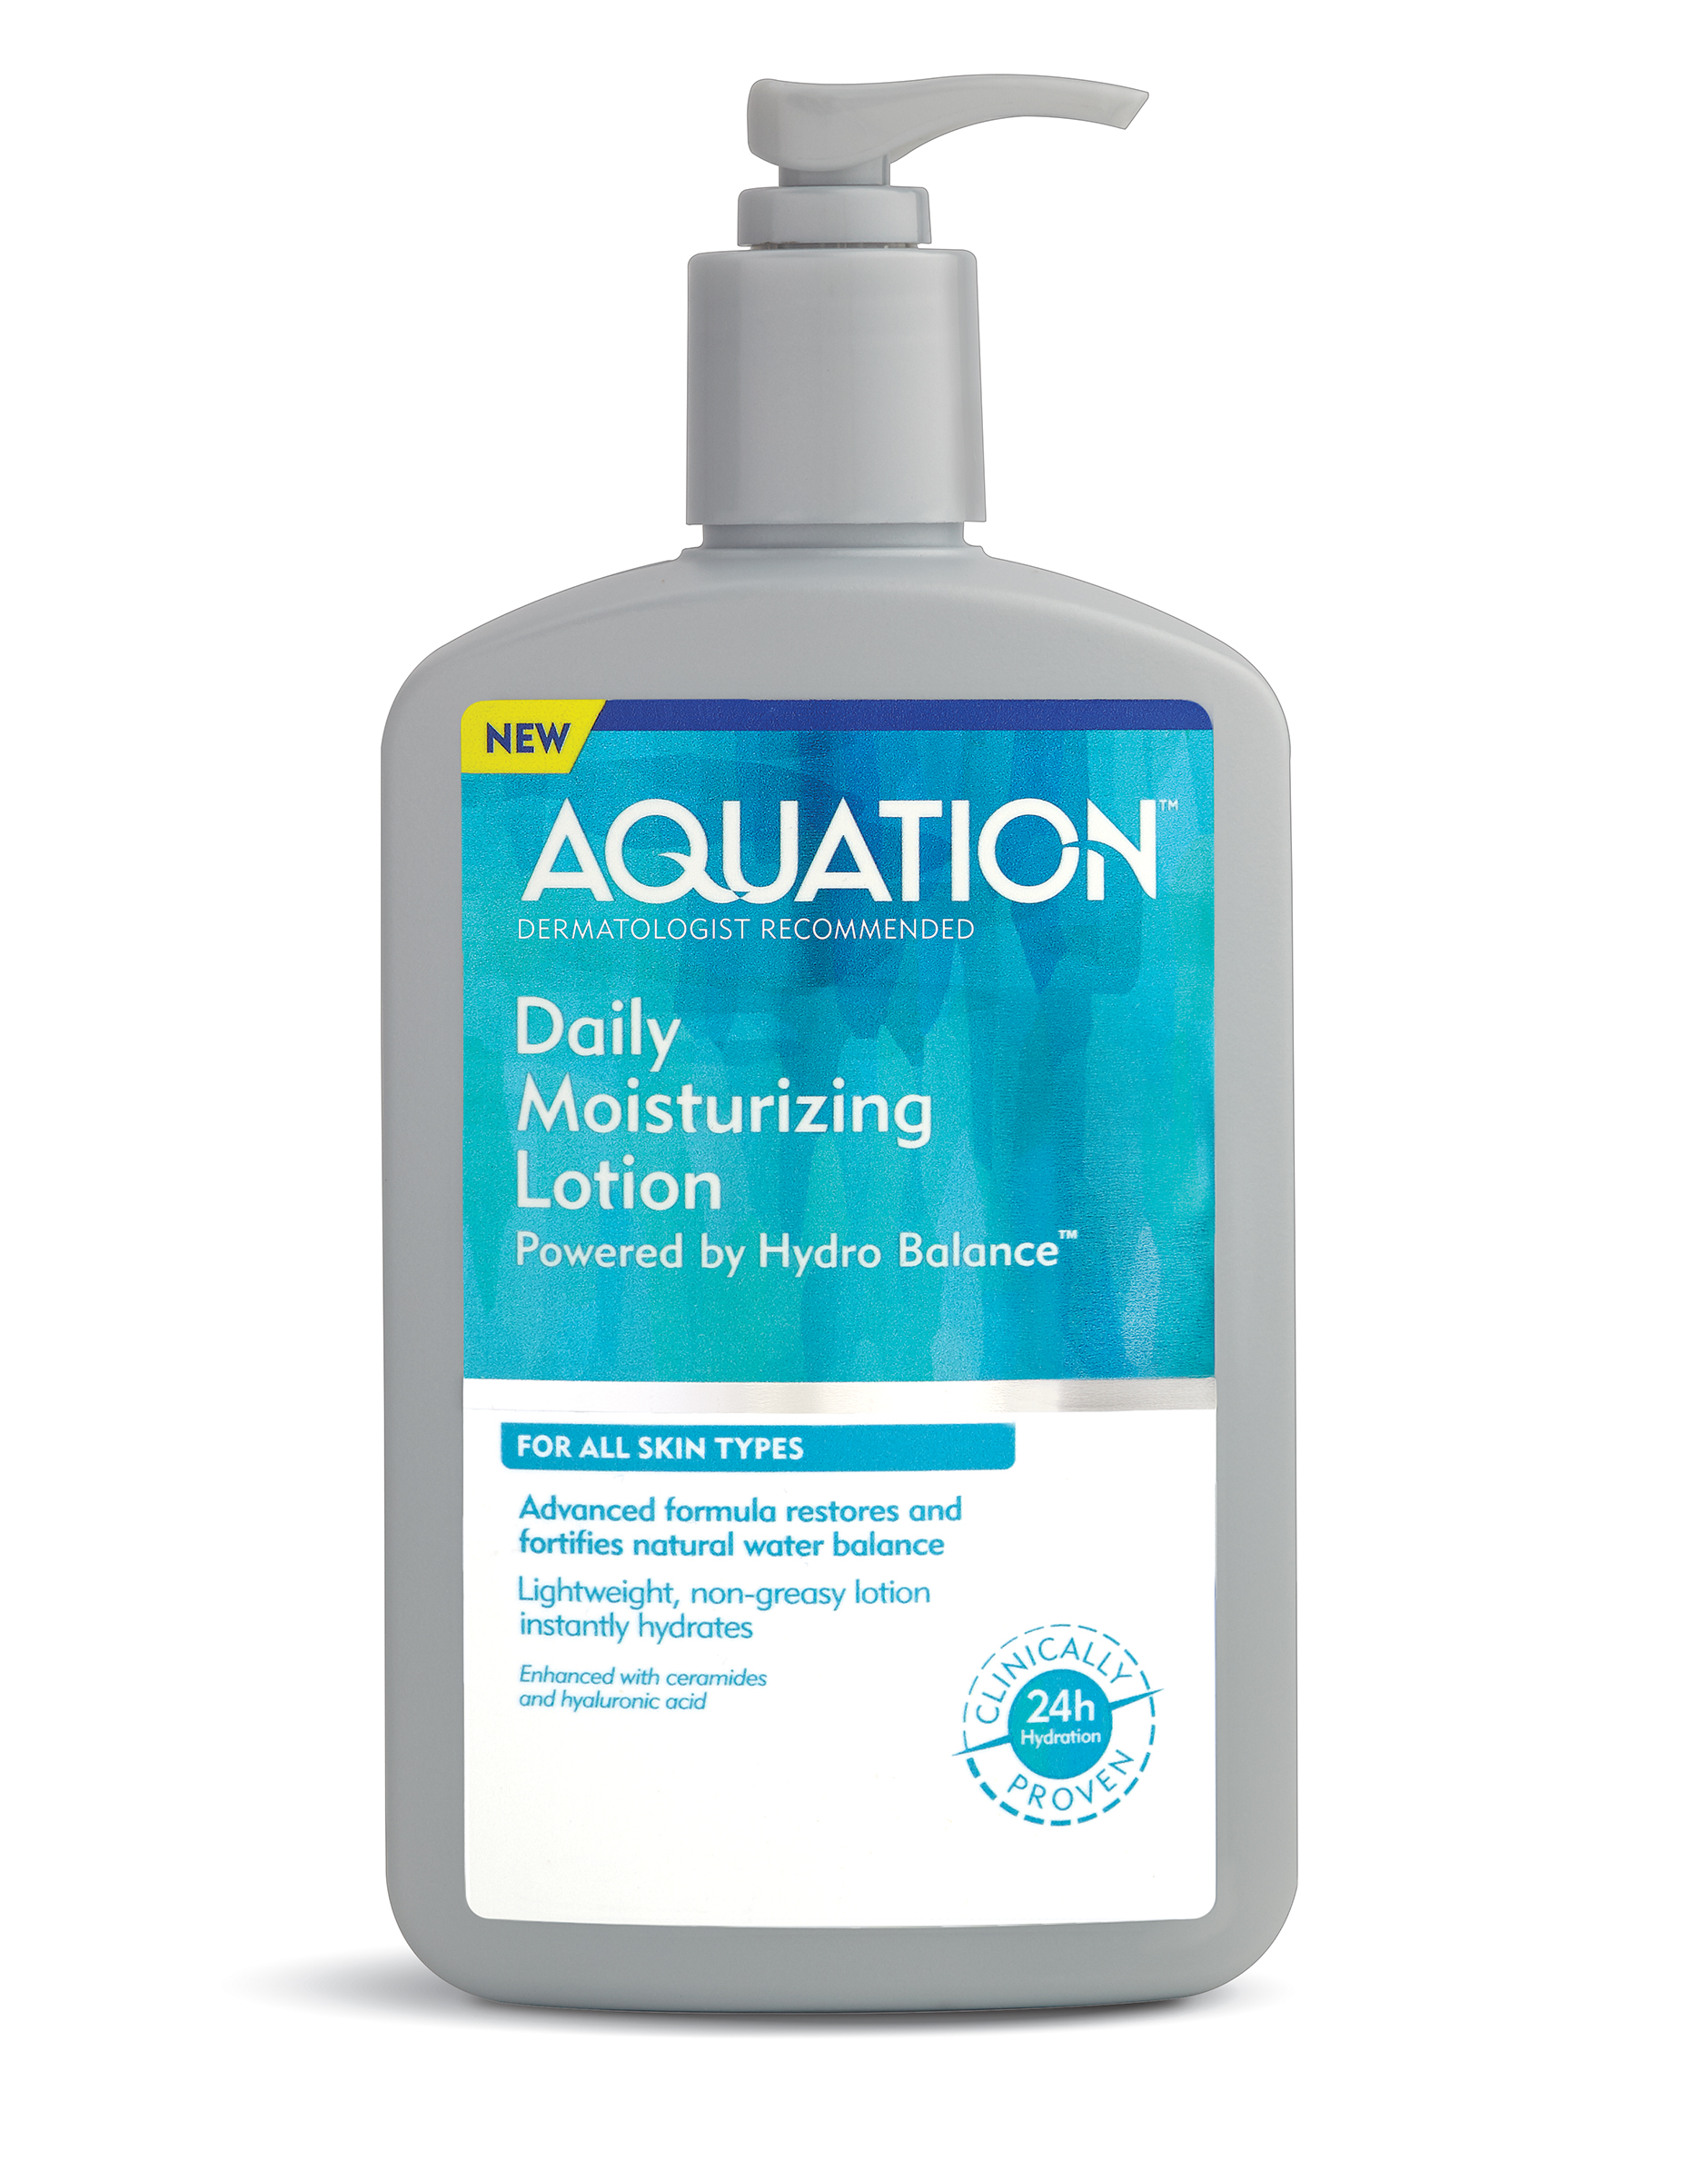 Aquation Daily Moisturizing Lotion